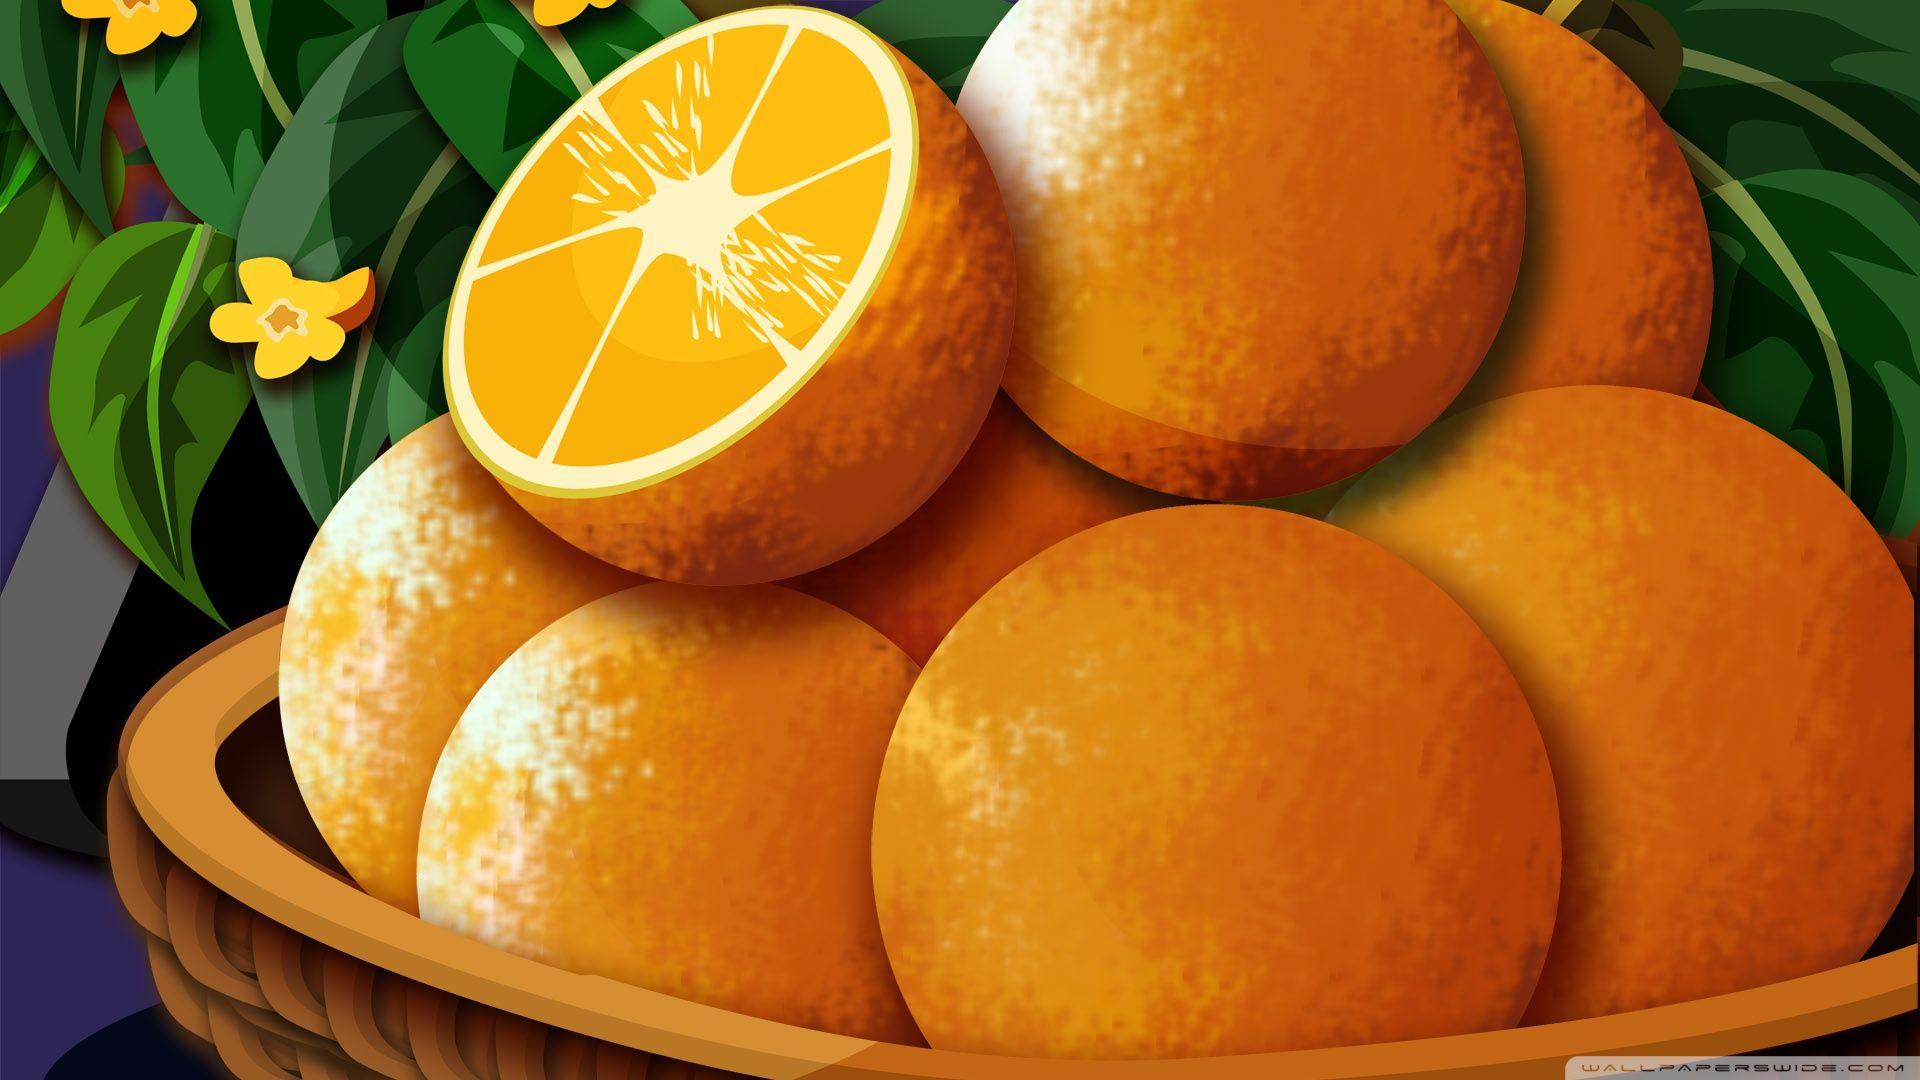 Basket Of Oranges HD desktop wallpaper, Widescreen, High